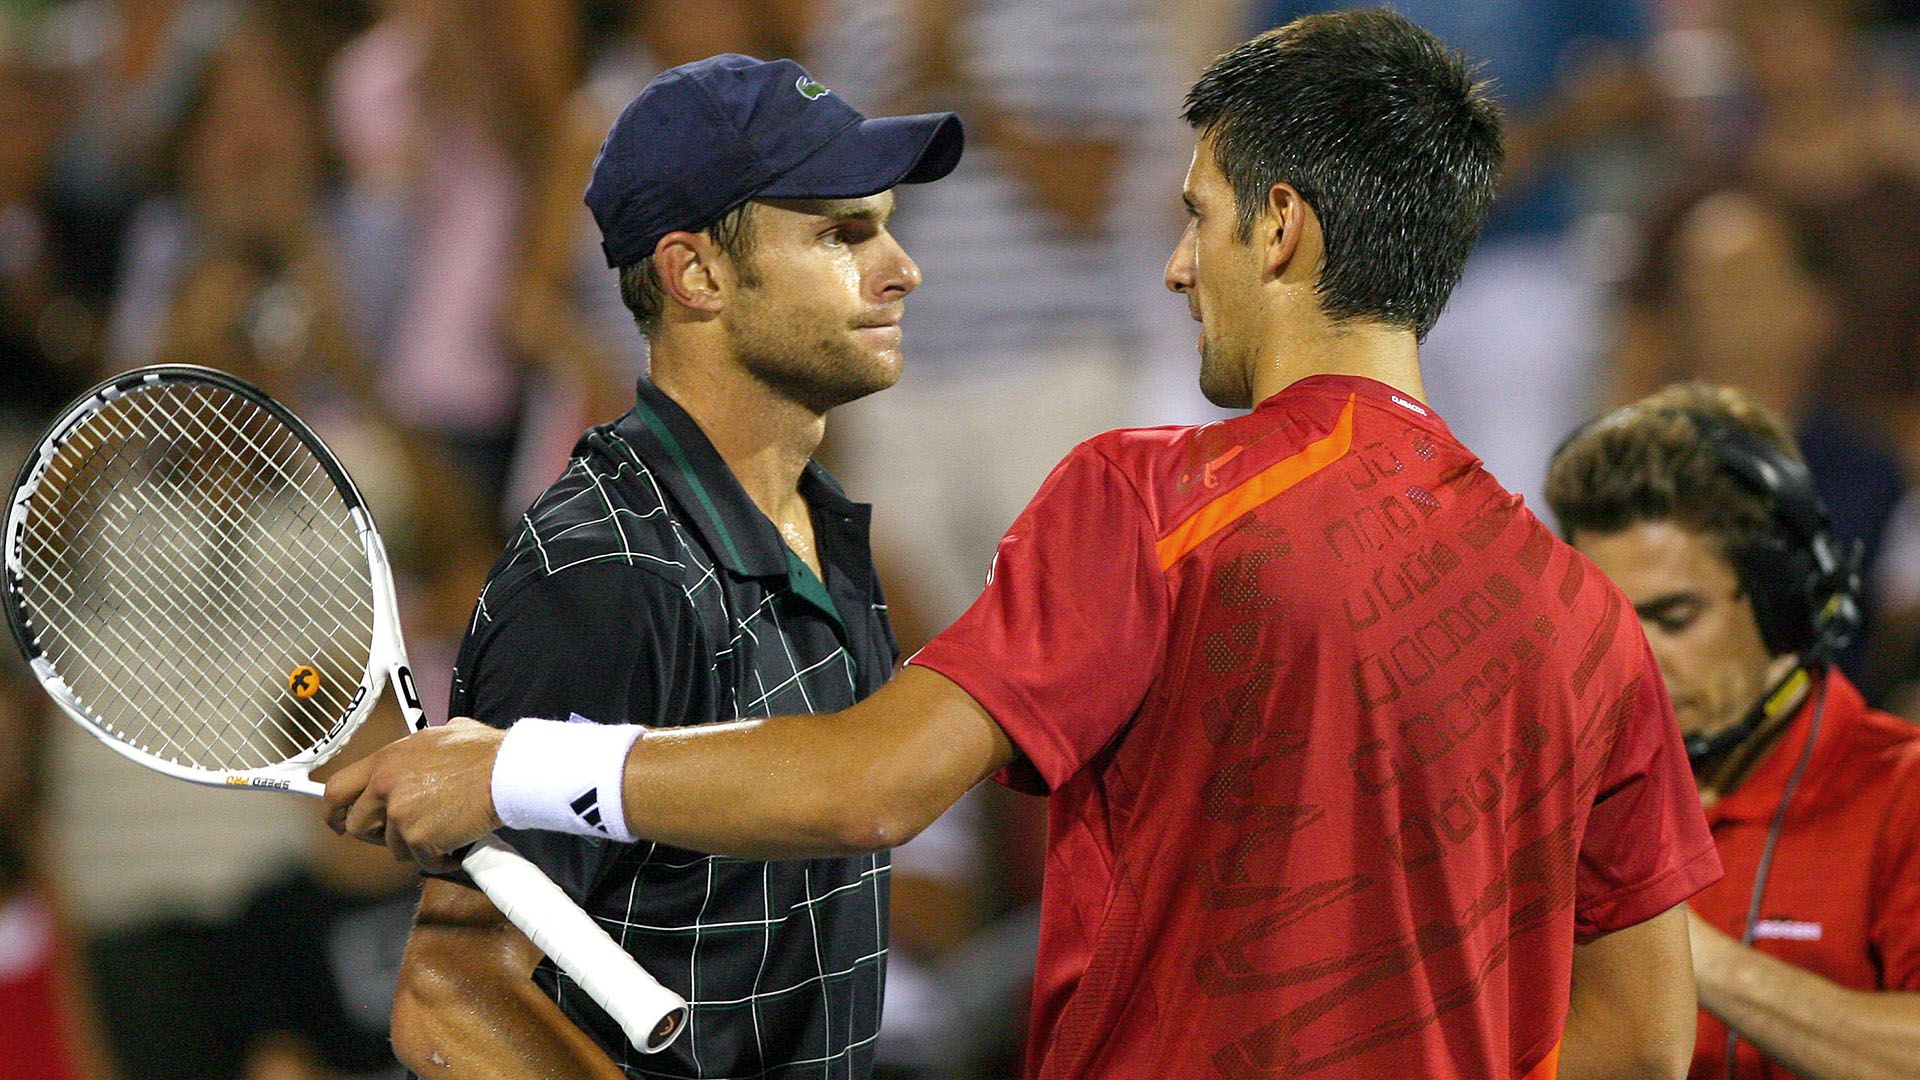 Andy Roddick le contestó a Novak Djokovic por su postura anti vacuna (Credit: Photo by Ella Ling/Shutterstock)